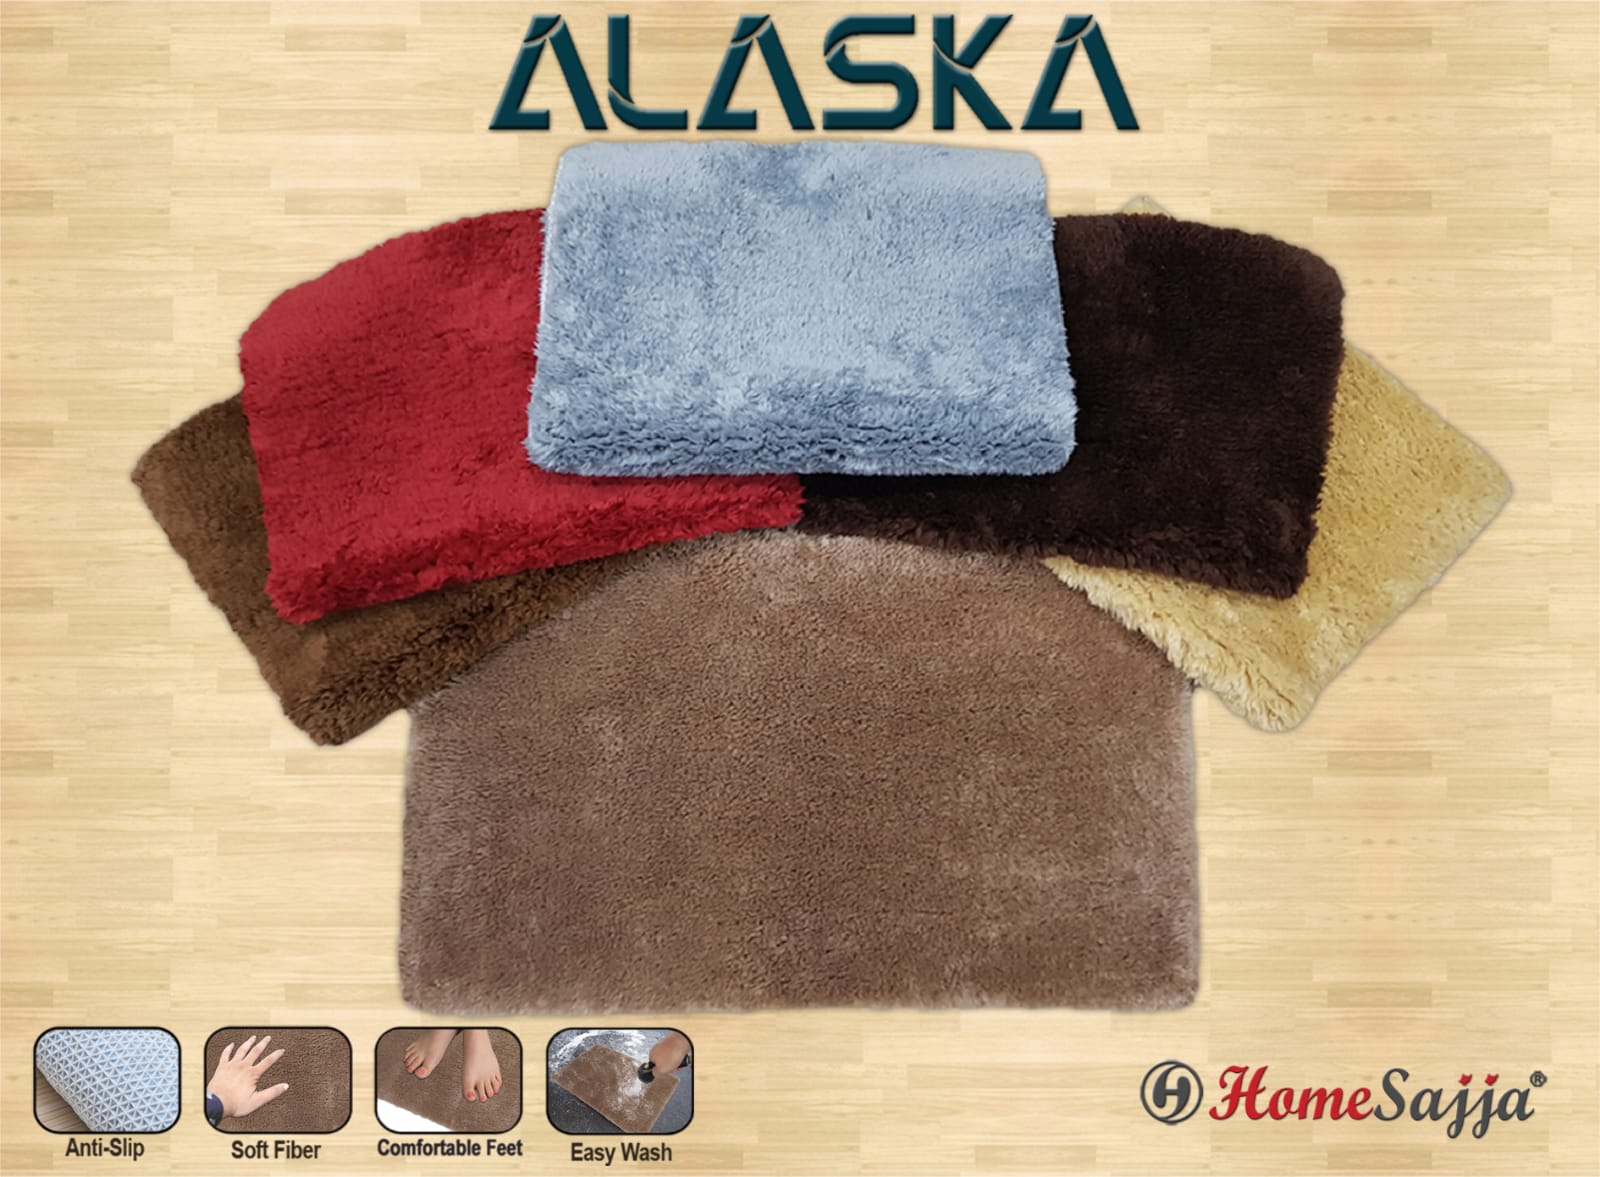  AlaskaMats by HomeSajja